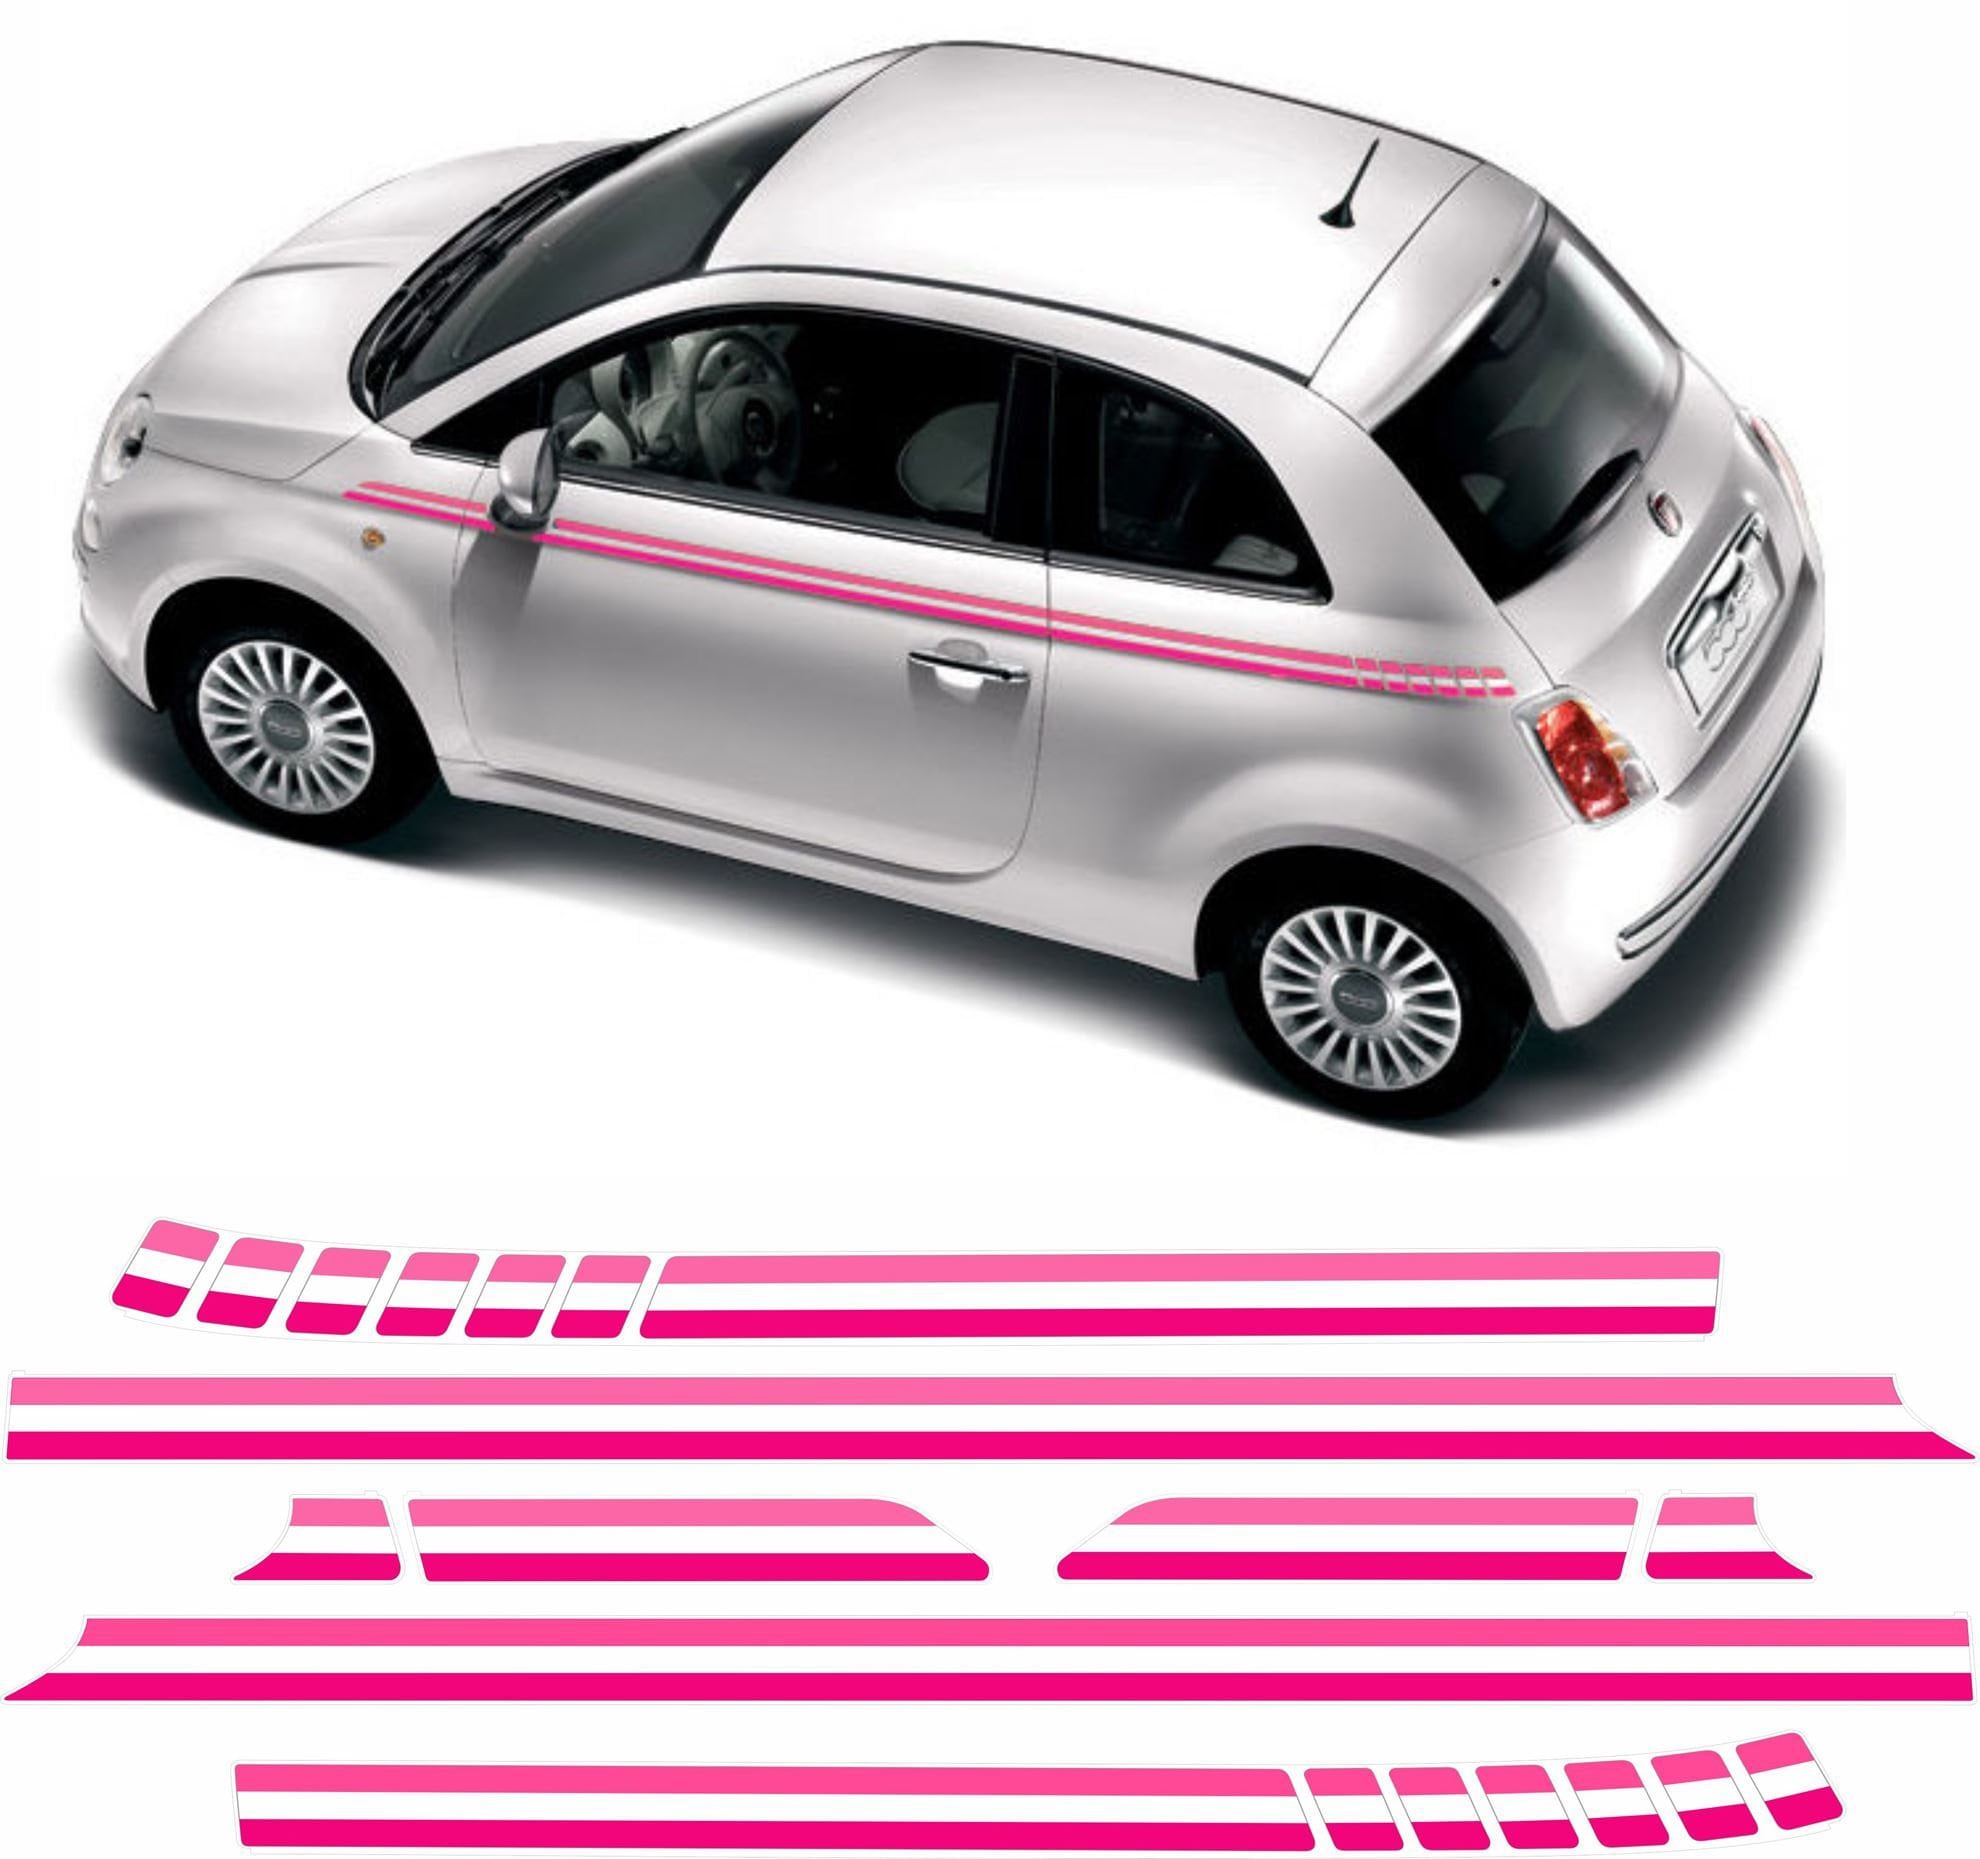 Kolibrie Overstijgen Kleren Fiat 500 Pink Ide Stripes Stickers Decals Correct Size Etc - Etsy